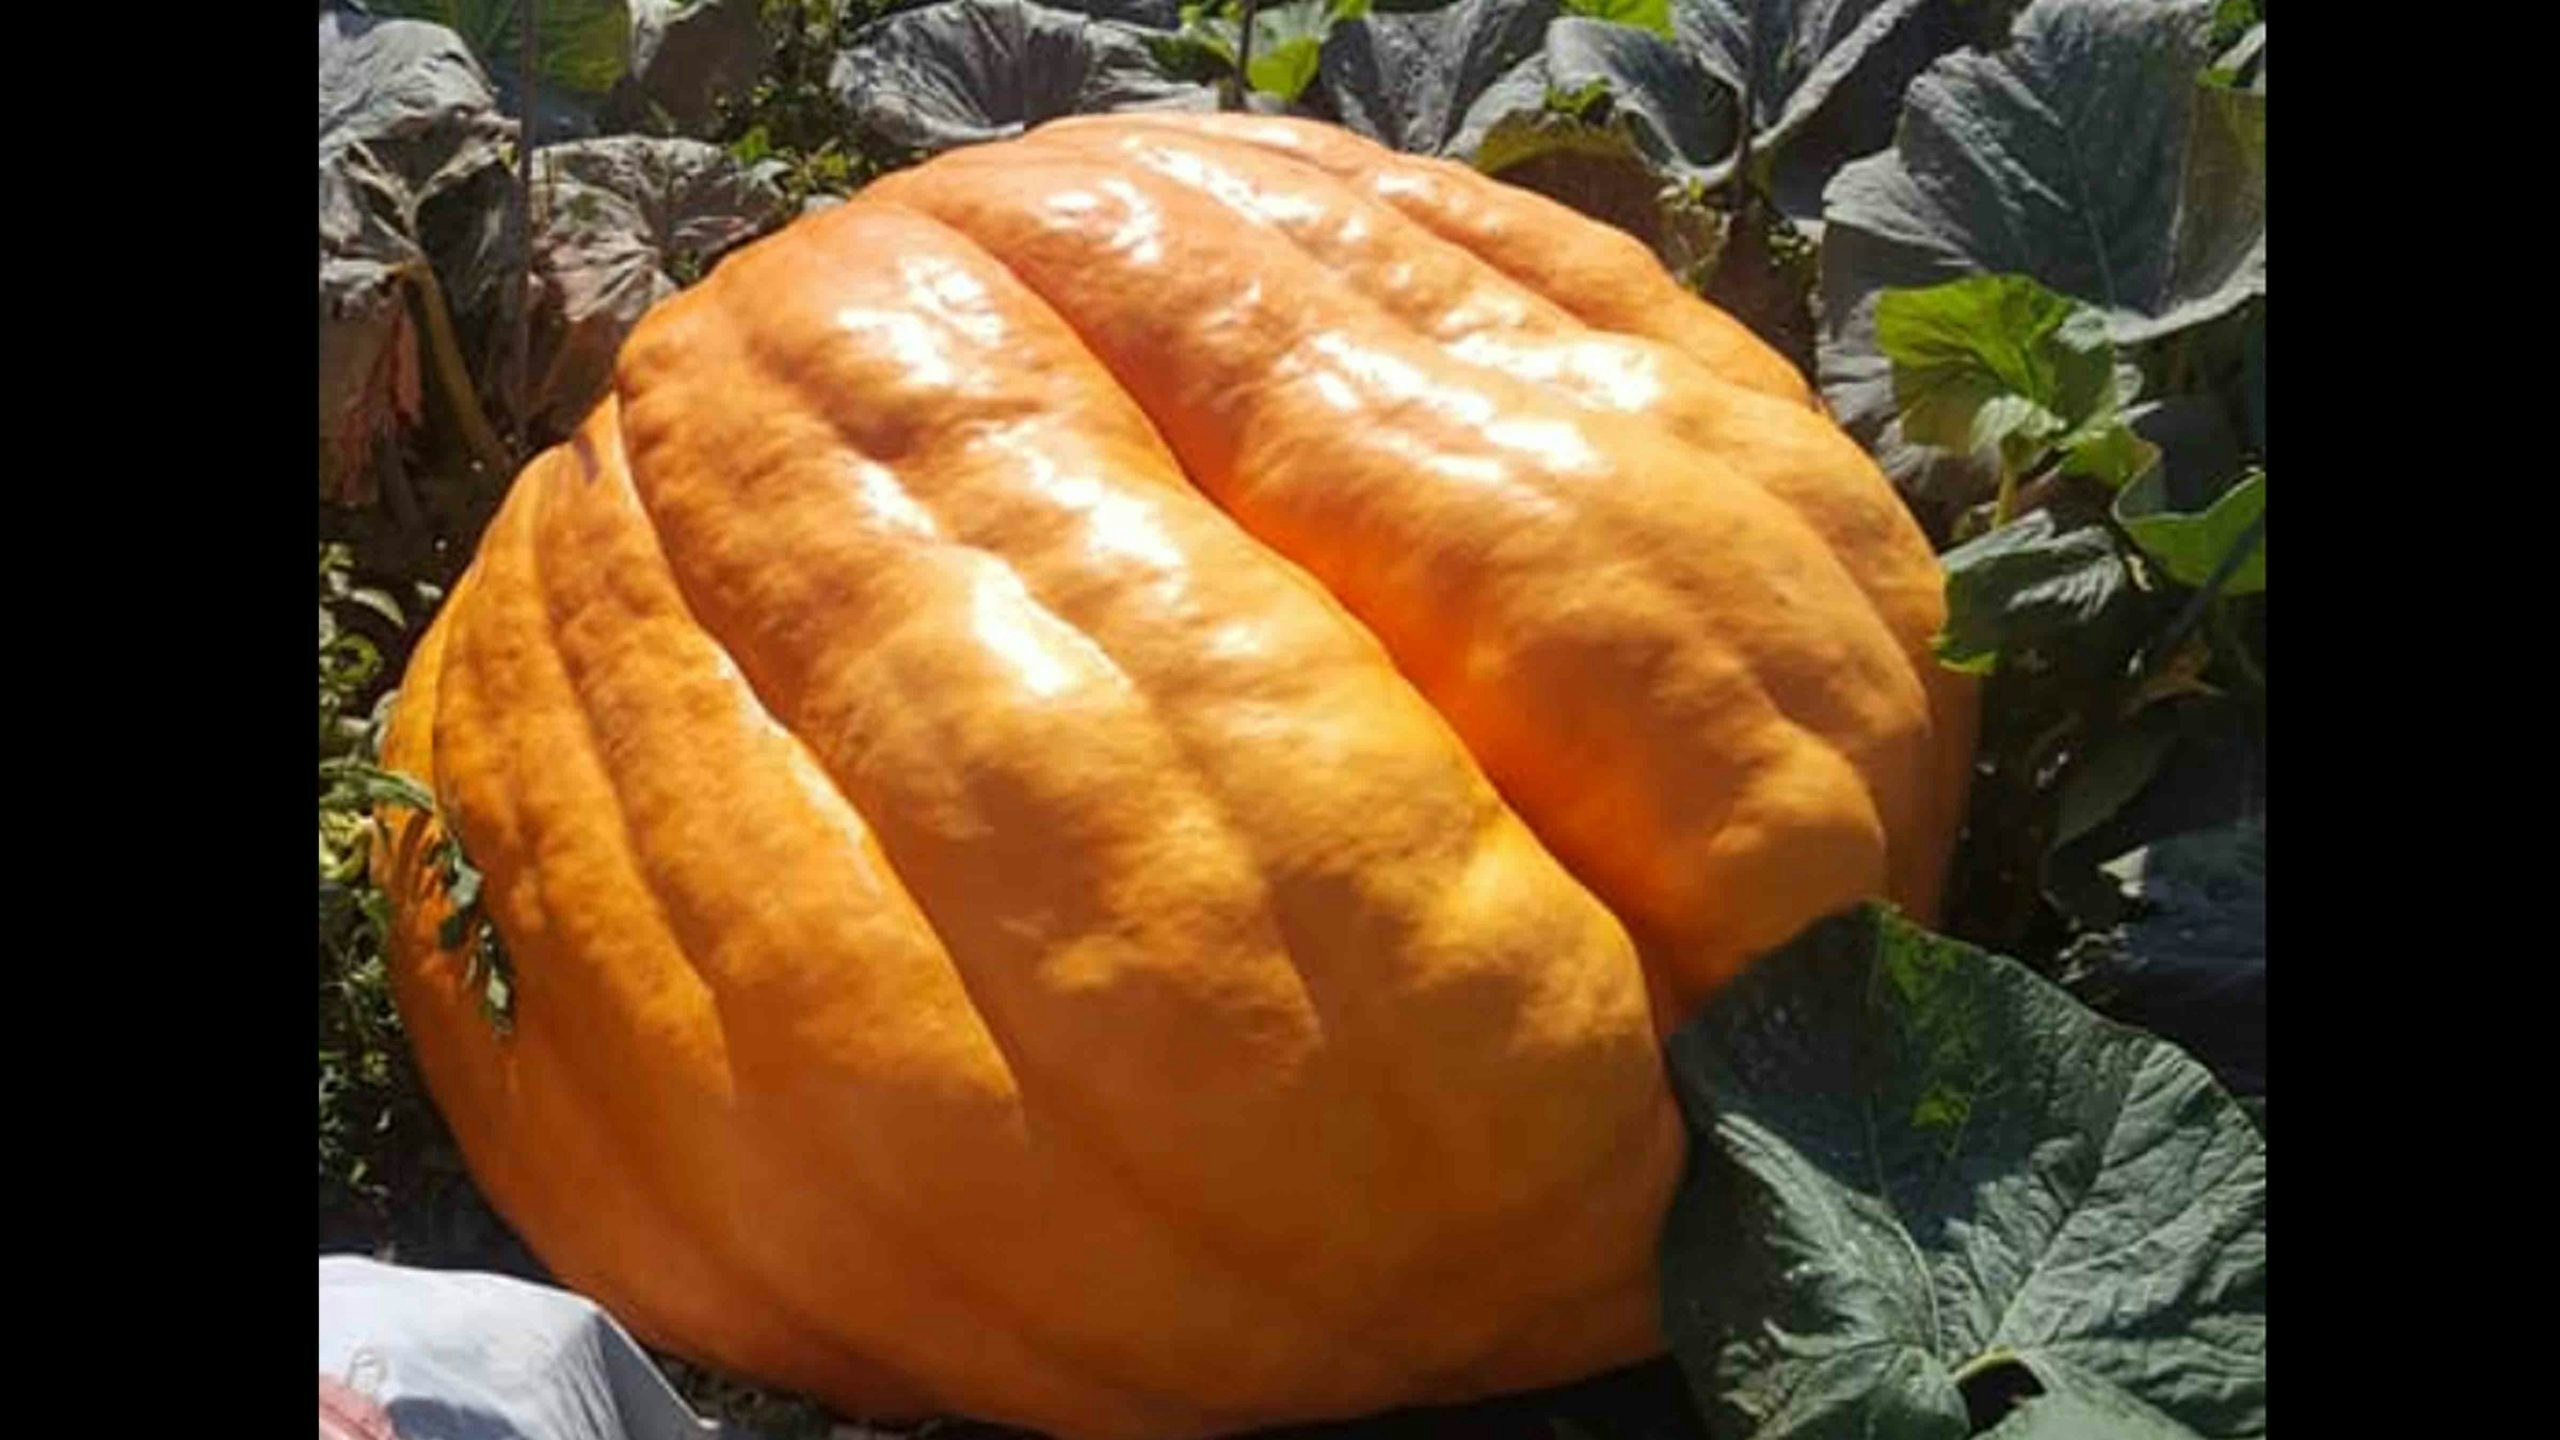 Giant pumpkin 2 8 21 scaled